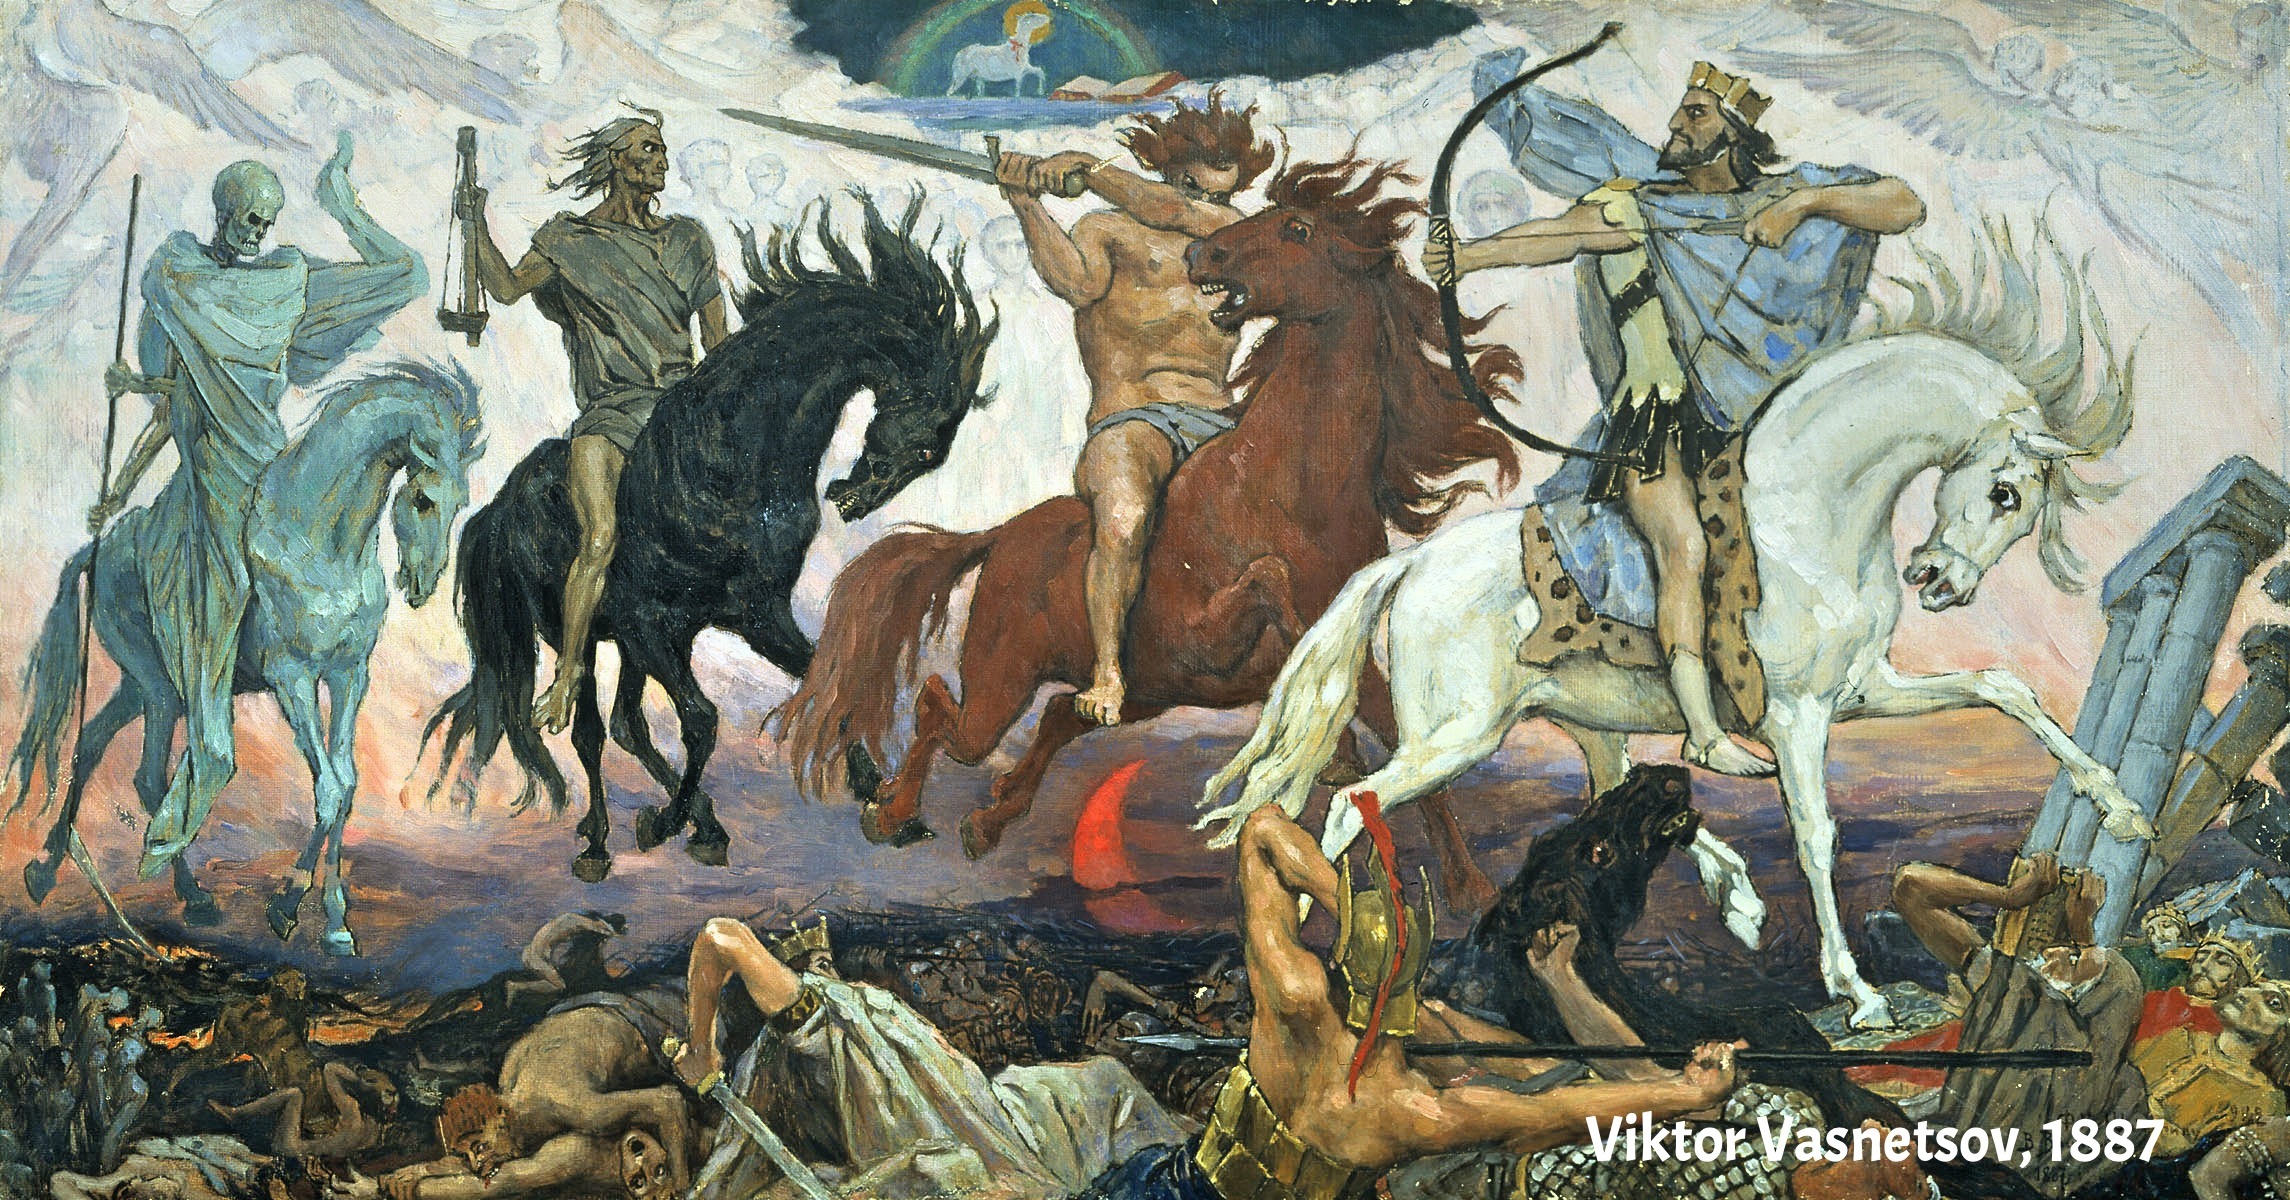 The Four Horses of Revelation (1)